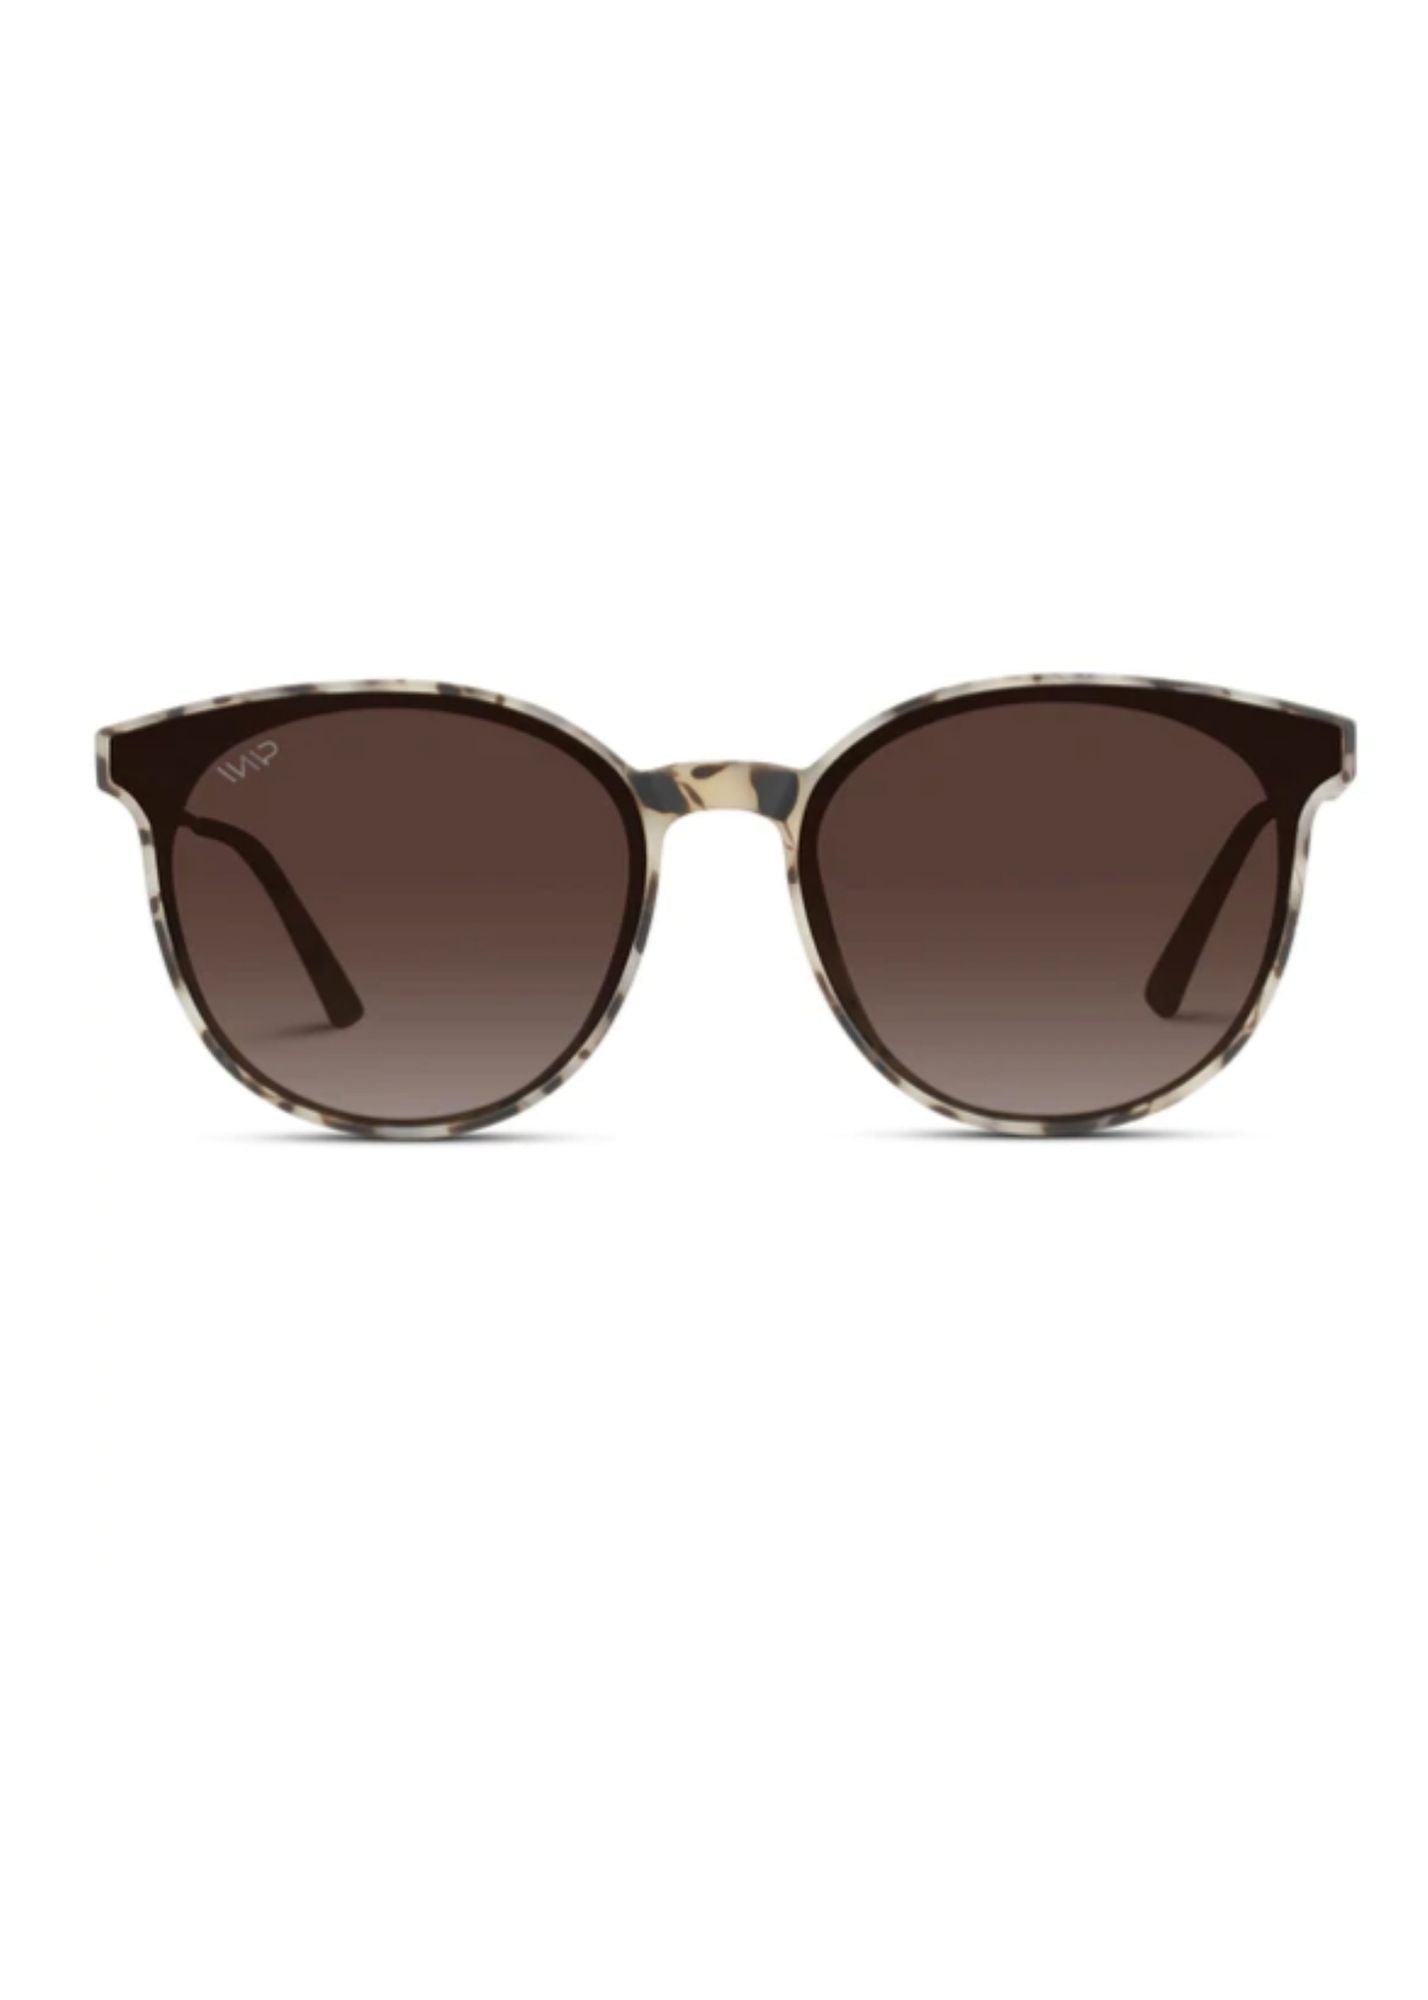 Aubrie Polarized Beige Sunglasses Accessories WearMe Pro